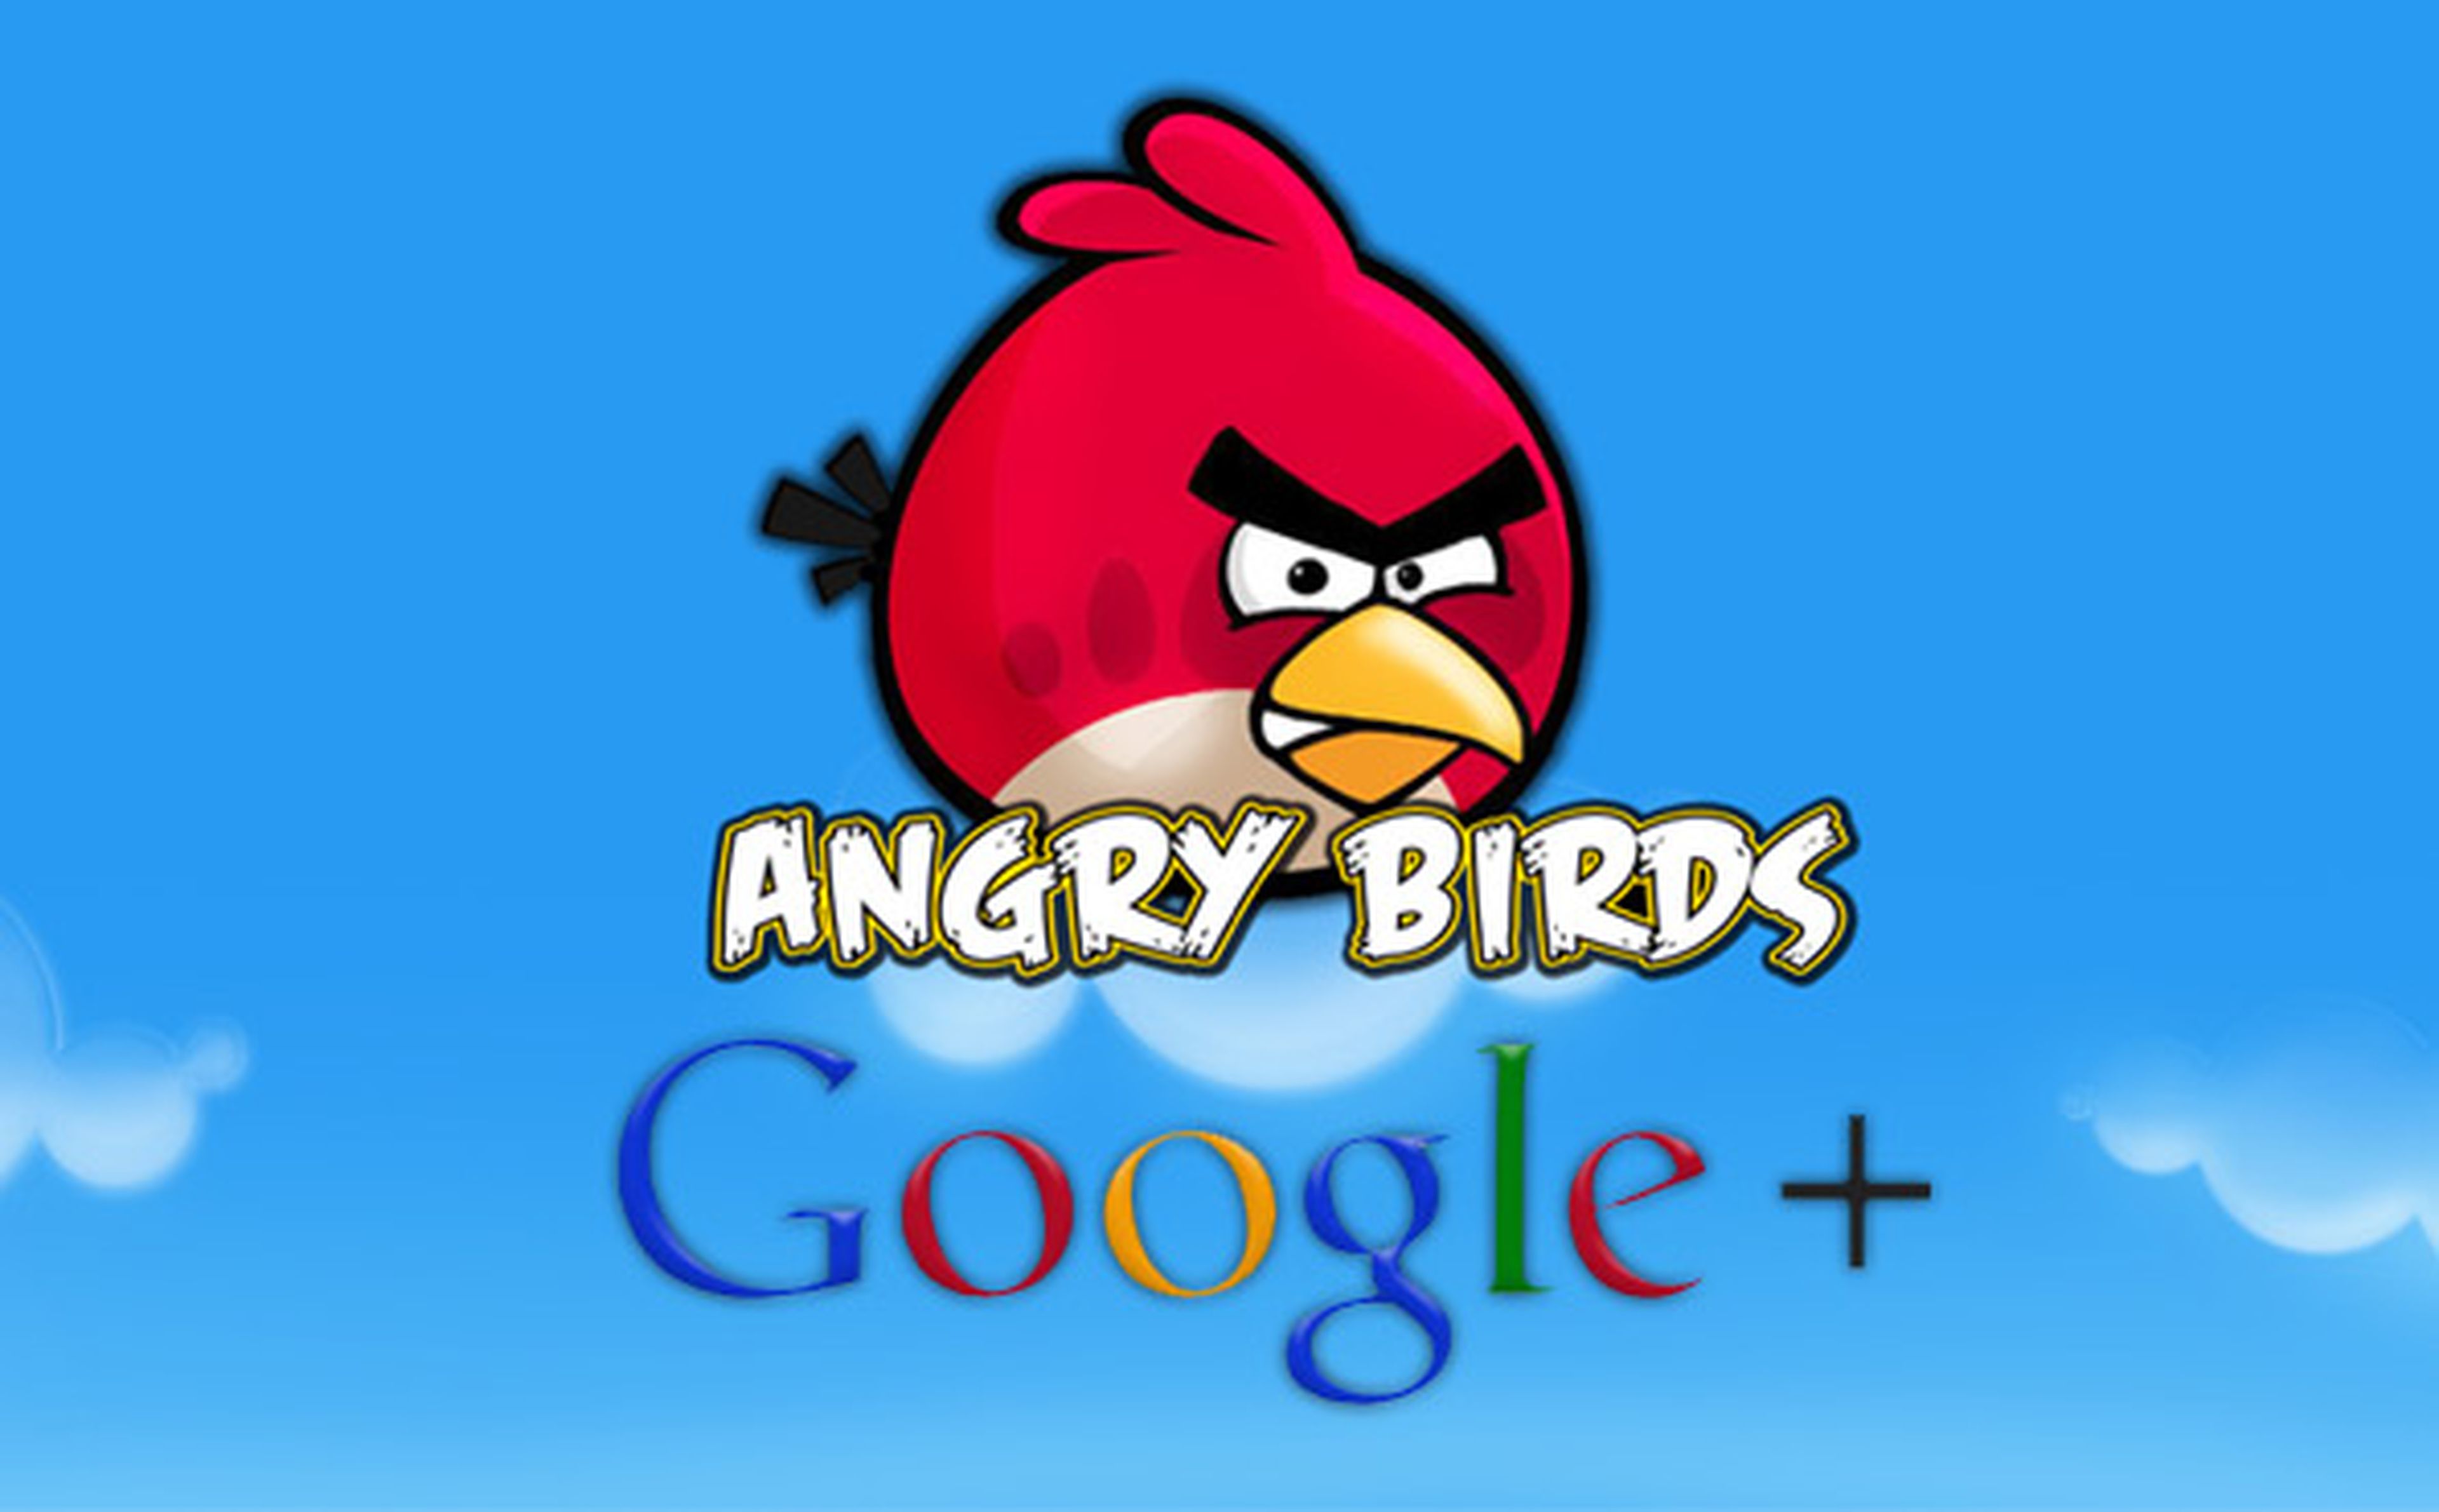 Angry Birds, primero en Google+